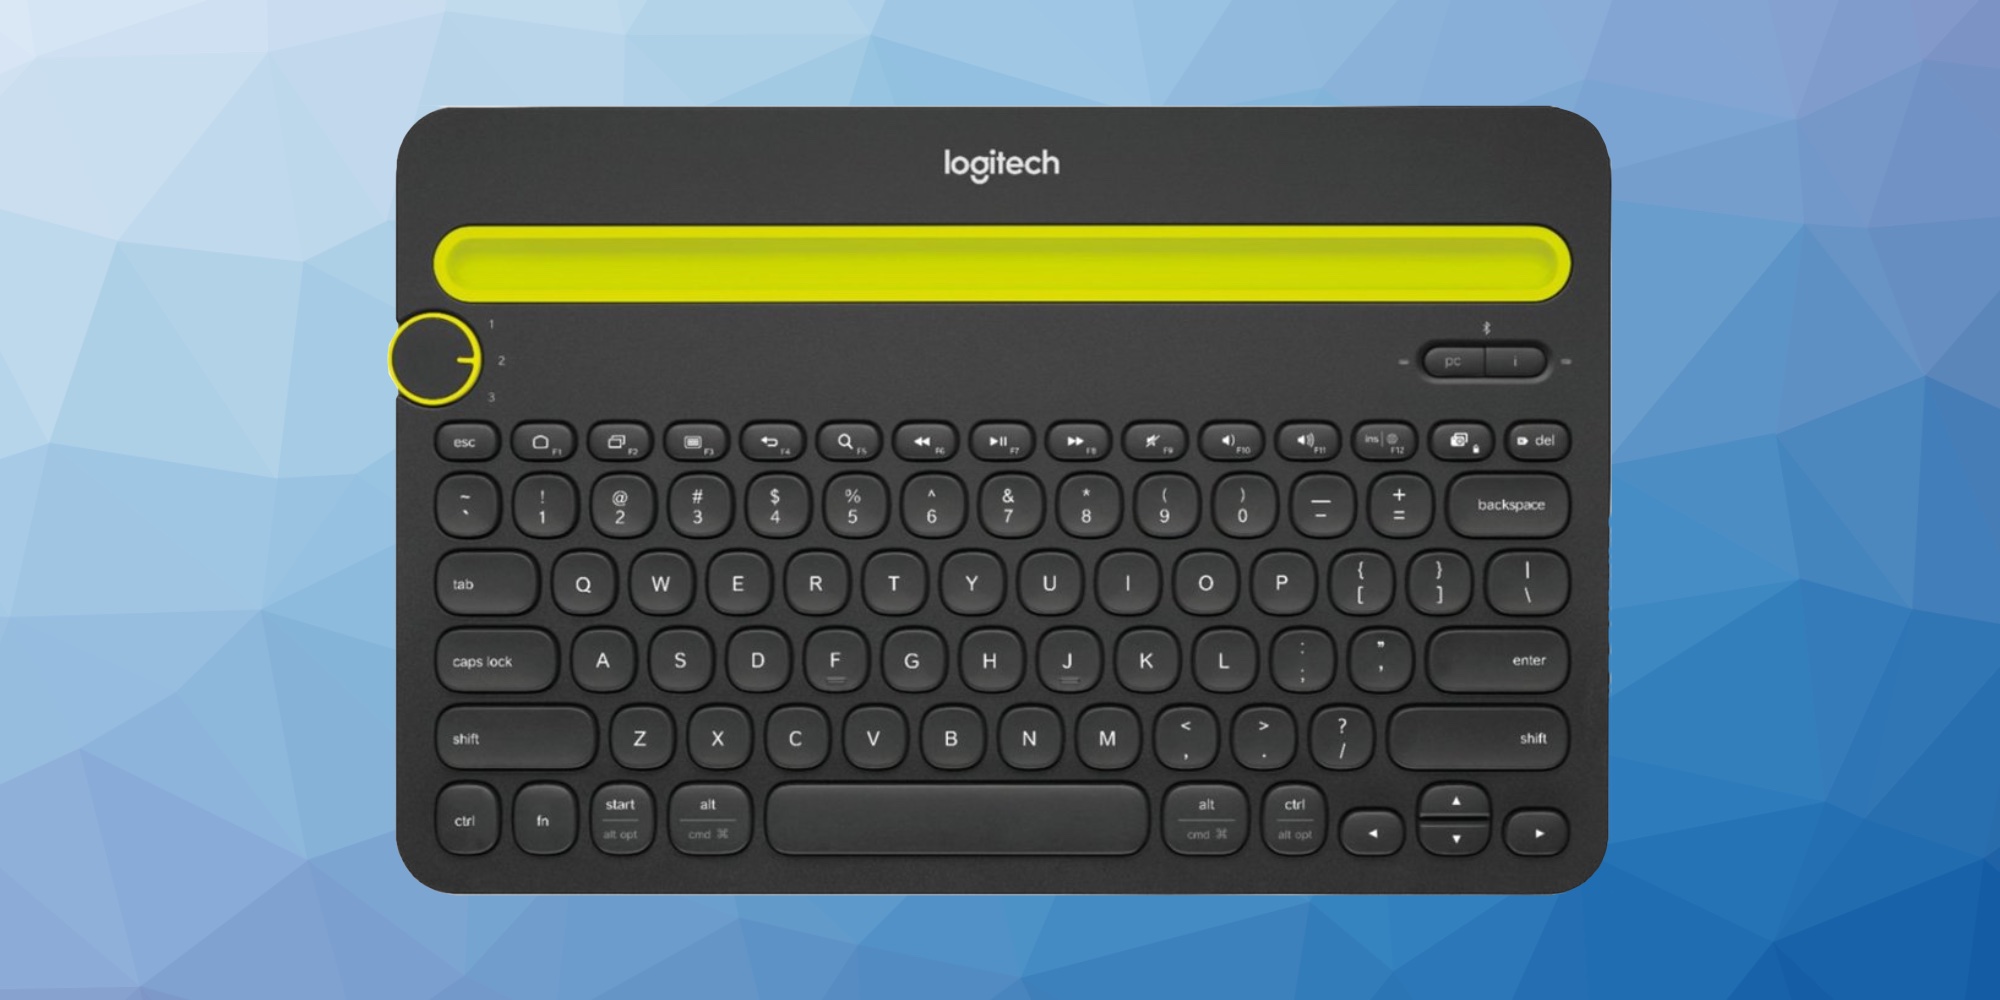 how to use lightshot on logitech keyboard